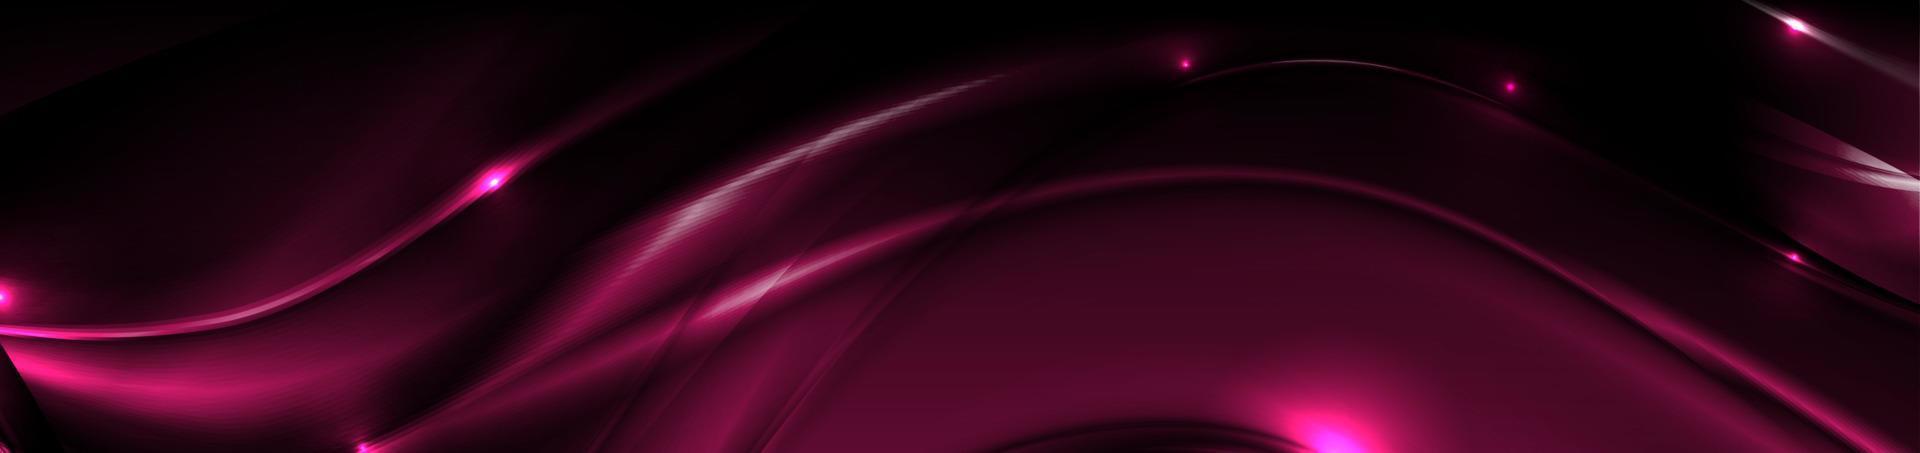 Abstract dark purple liquid blurred neon waves vector banner